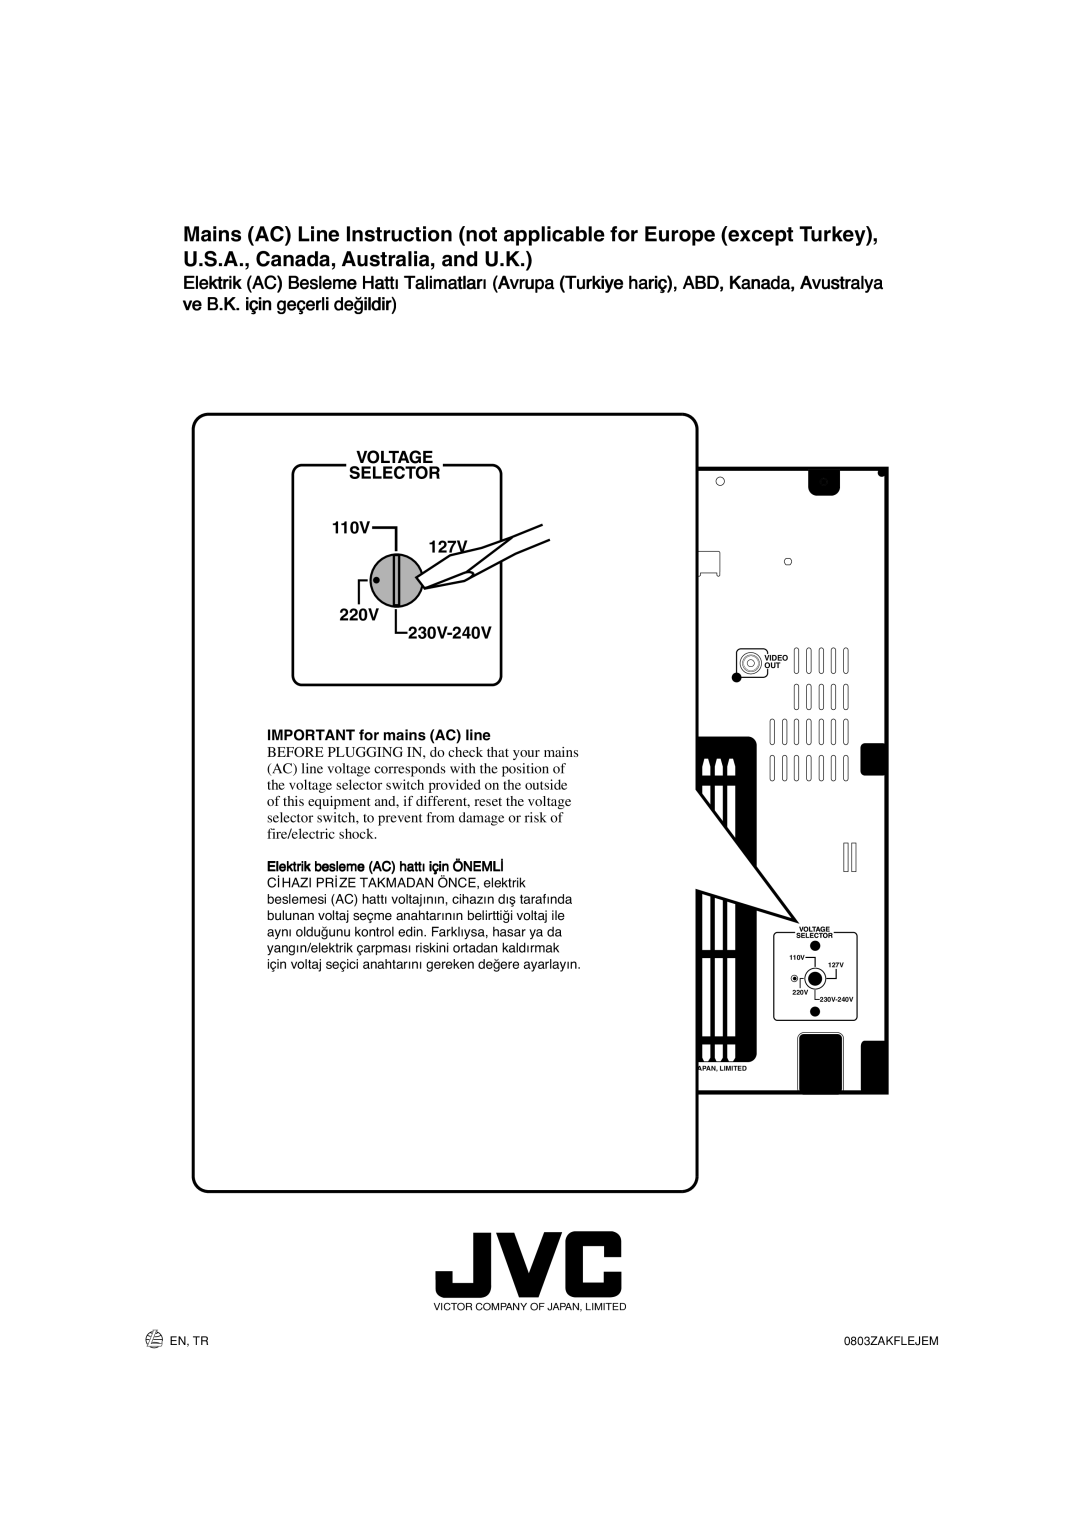 JVC SP-MXSK3, MX-SK3 110V, 220V, IMPORTANTformains AC line, Elektrik besleme AC hatt› için ÖNEML‹, En, Tr, 0803ZAKFLEJEM 